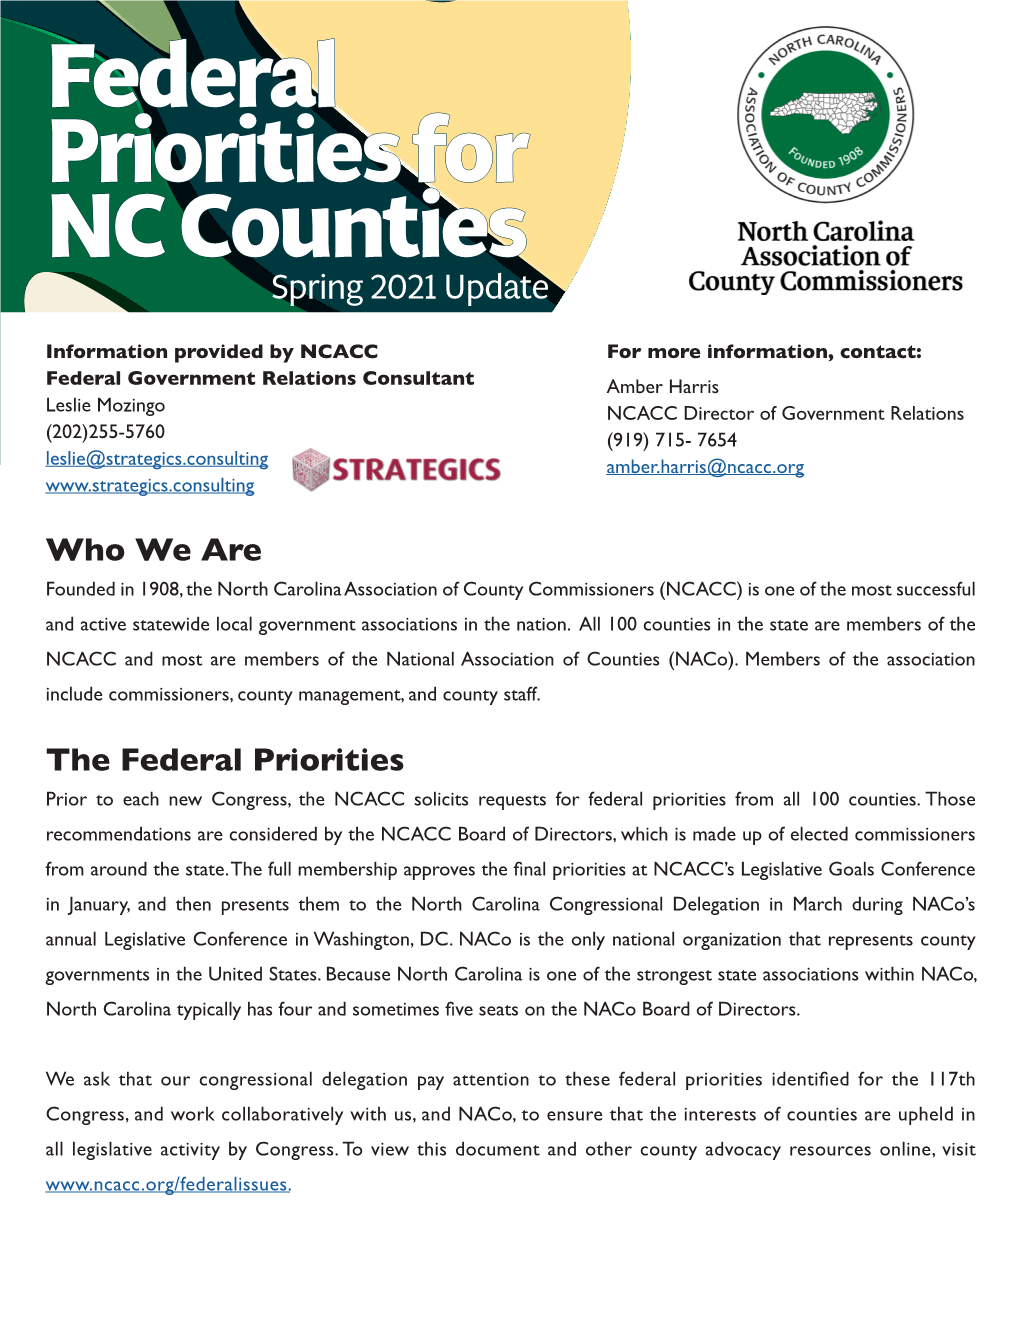 Federal Priorities for NC Counties Spring 2021 Update